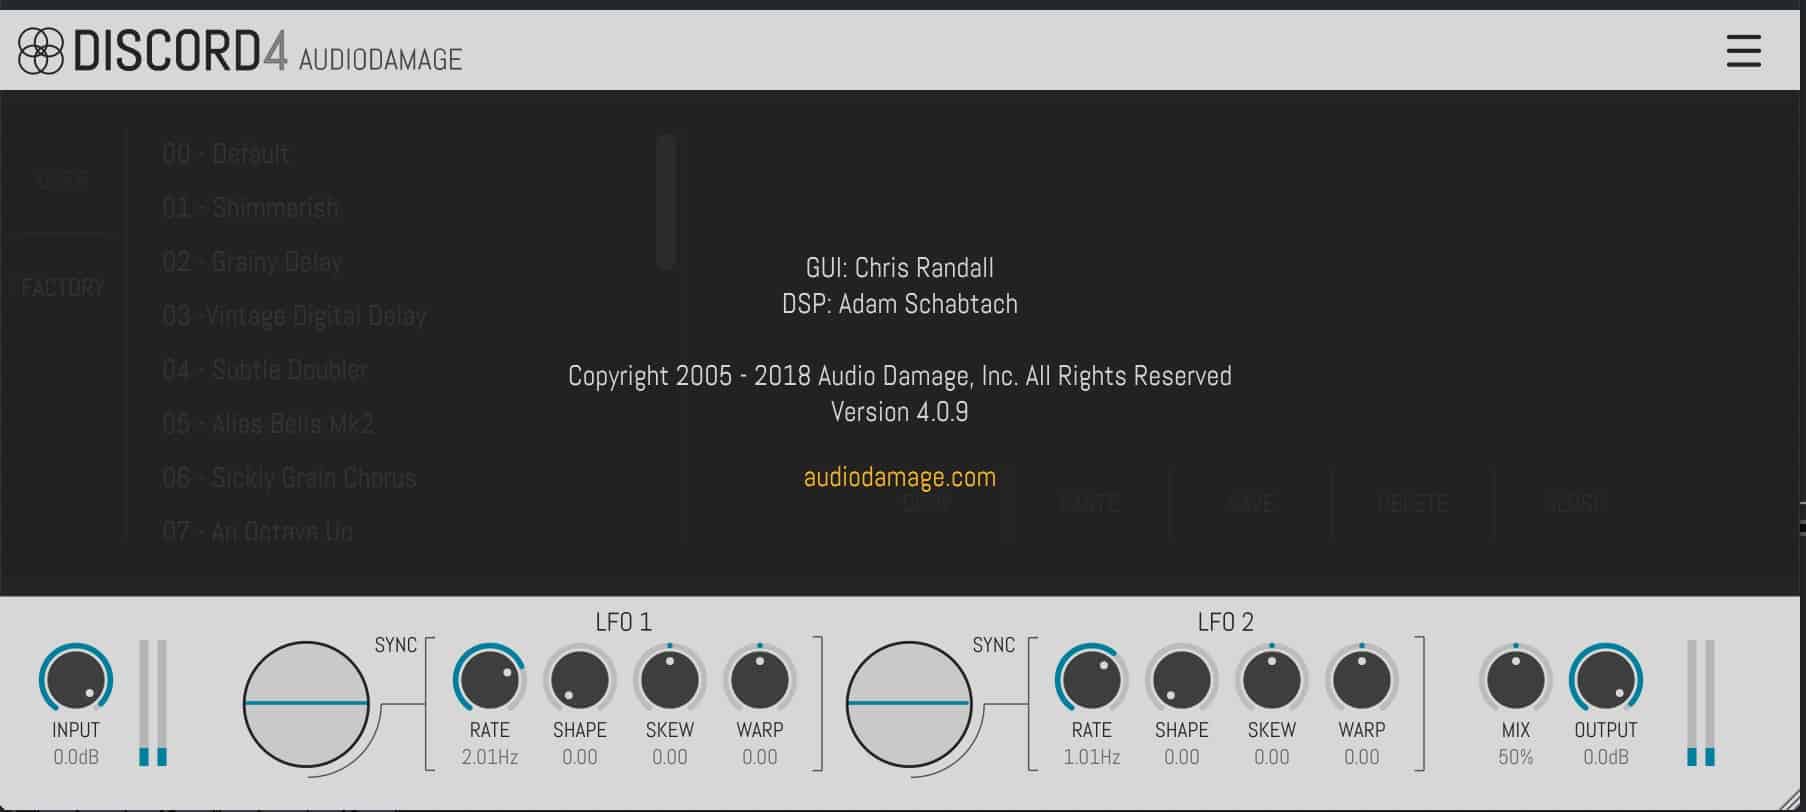 Audio Damage updates AD044 Discord4 to v4.0.9